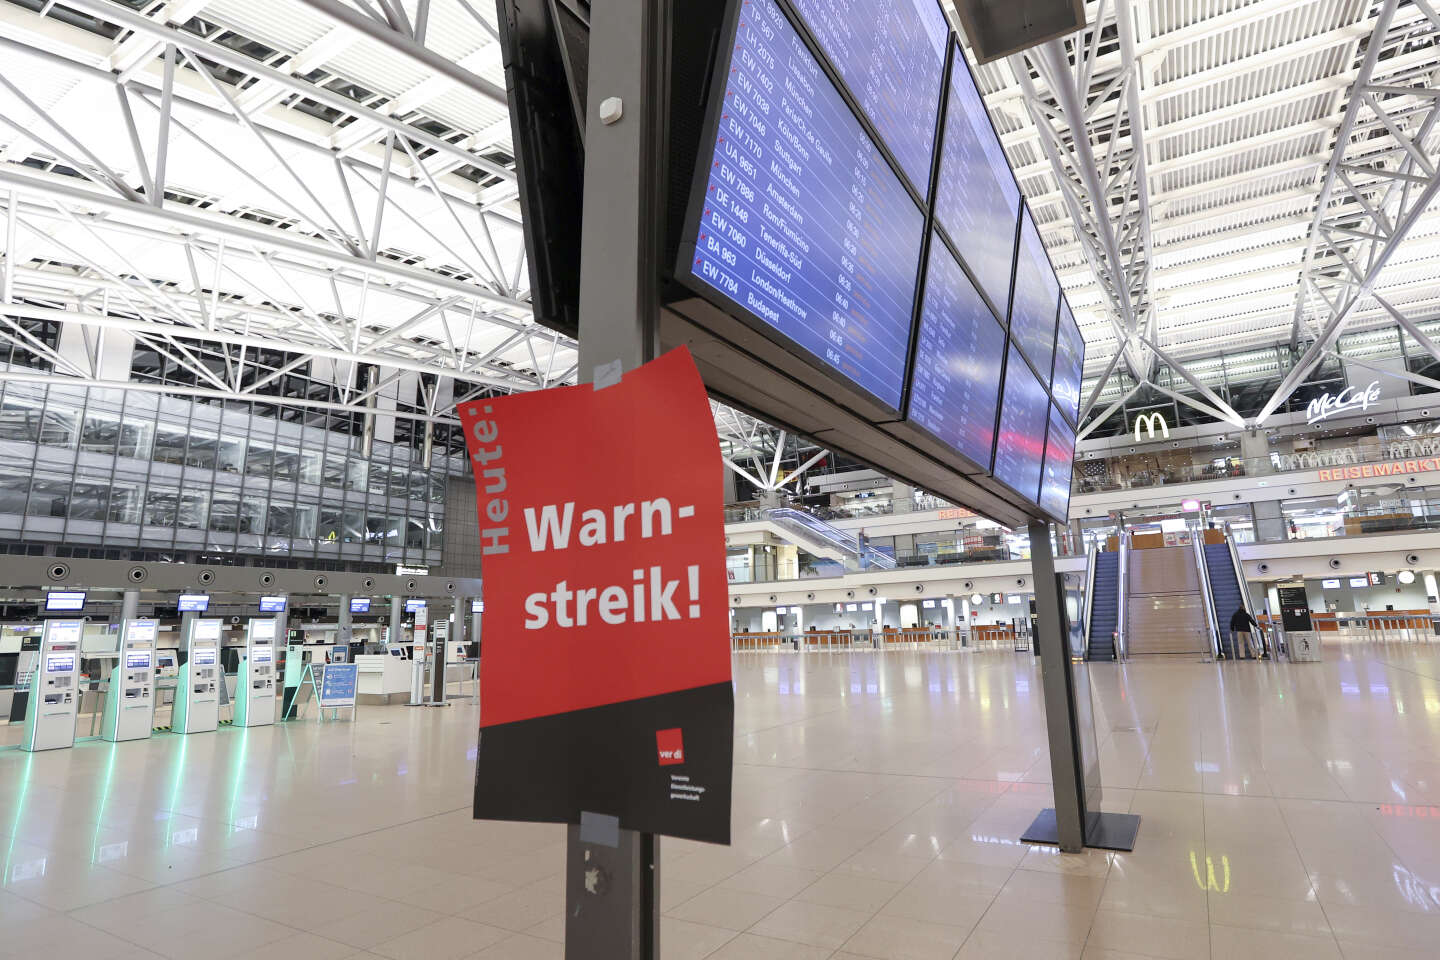 Germany hit by a “mega strike” in transport